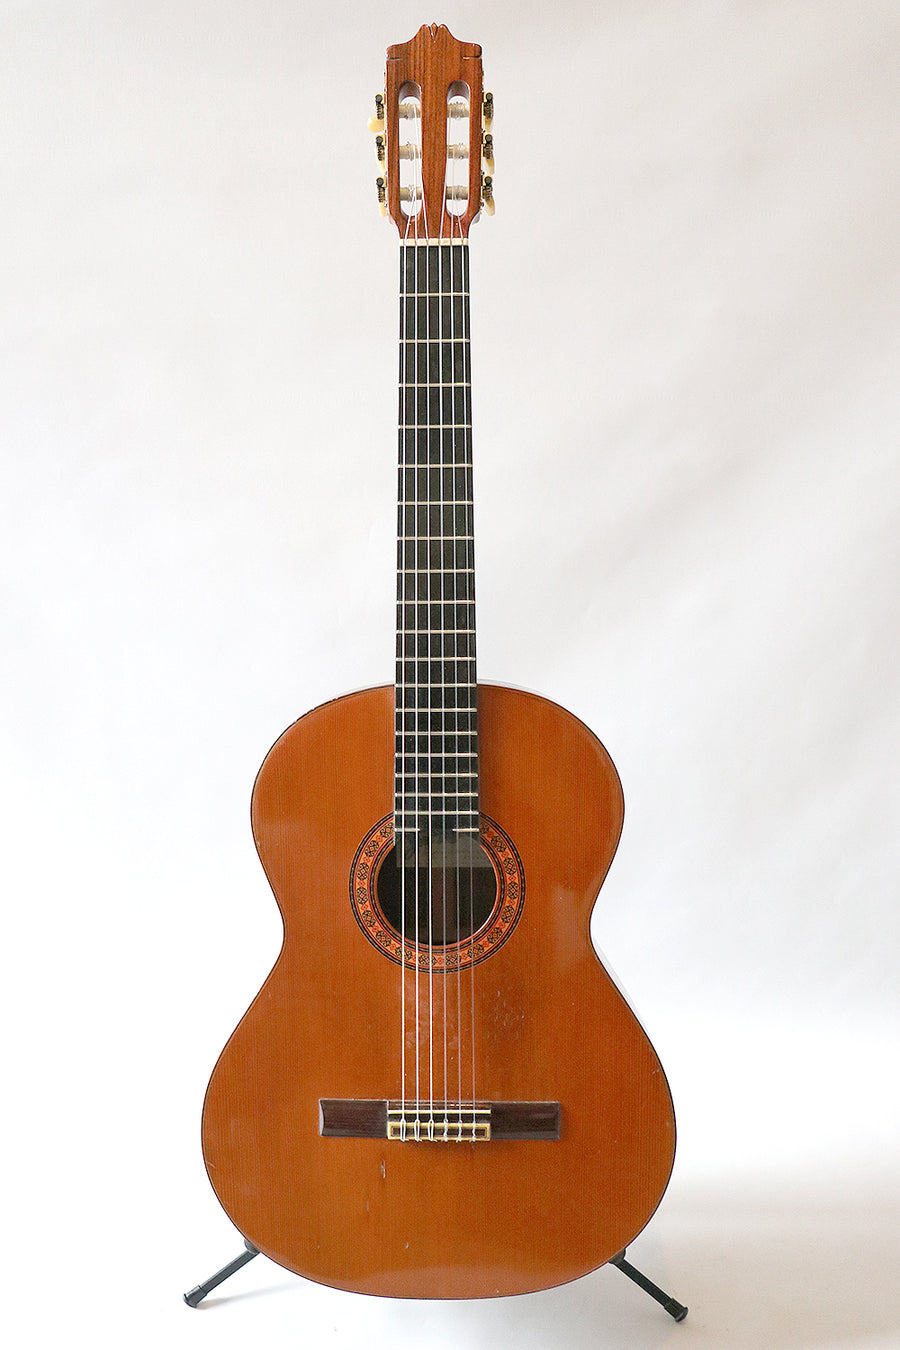 Jose Ramirez Guitarras de Estudio - 1983 Made in Spain